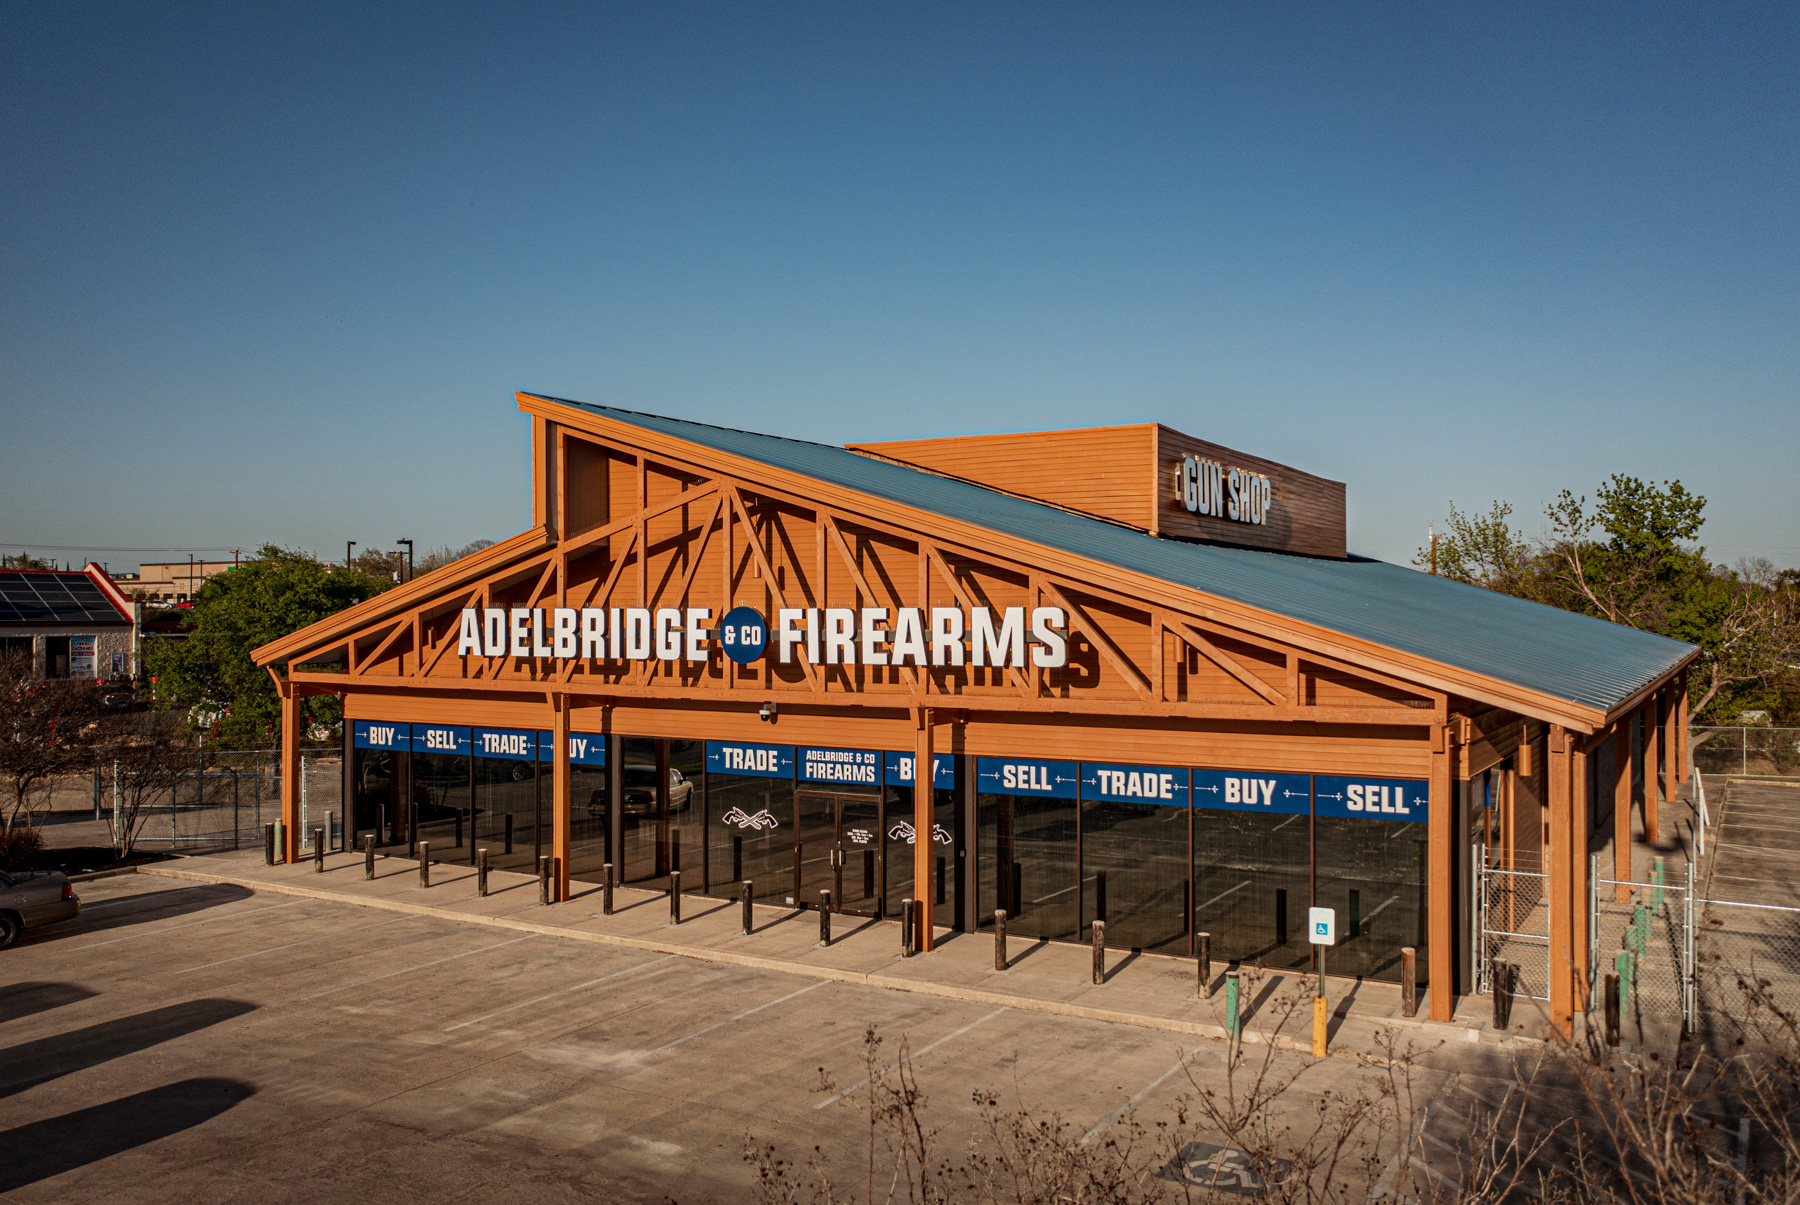 Adelbridge & Co. Firearms